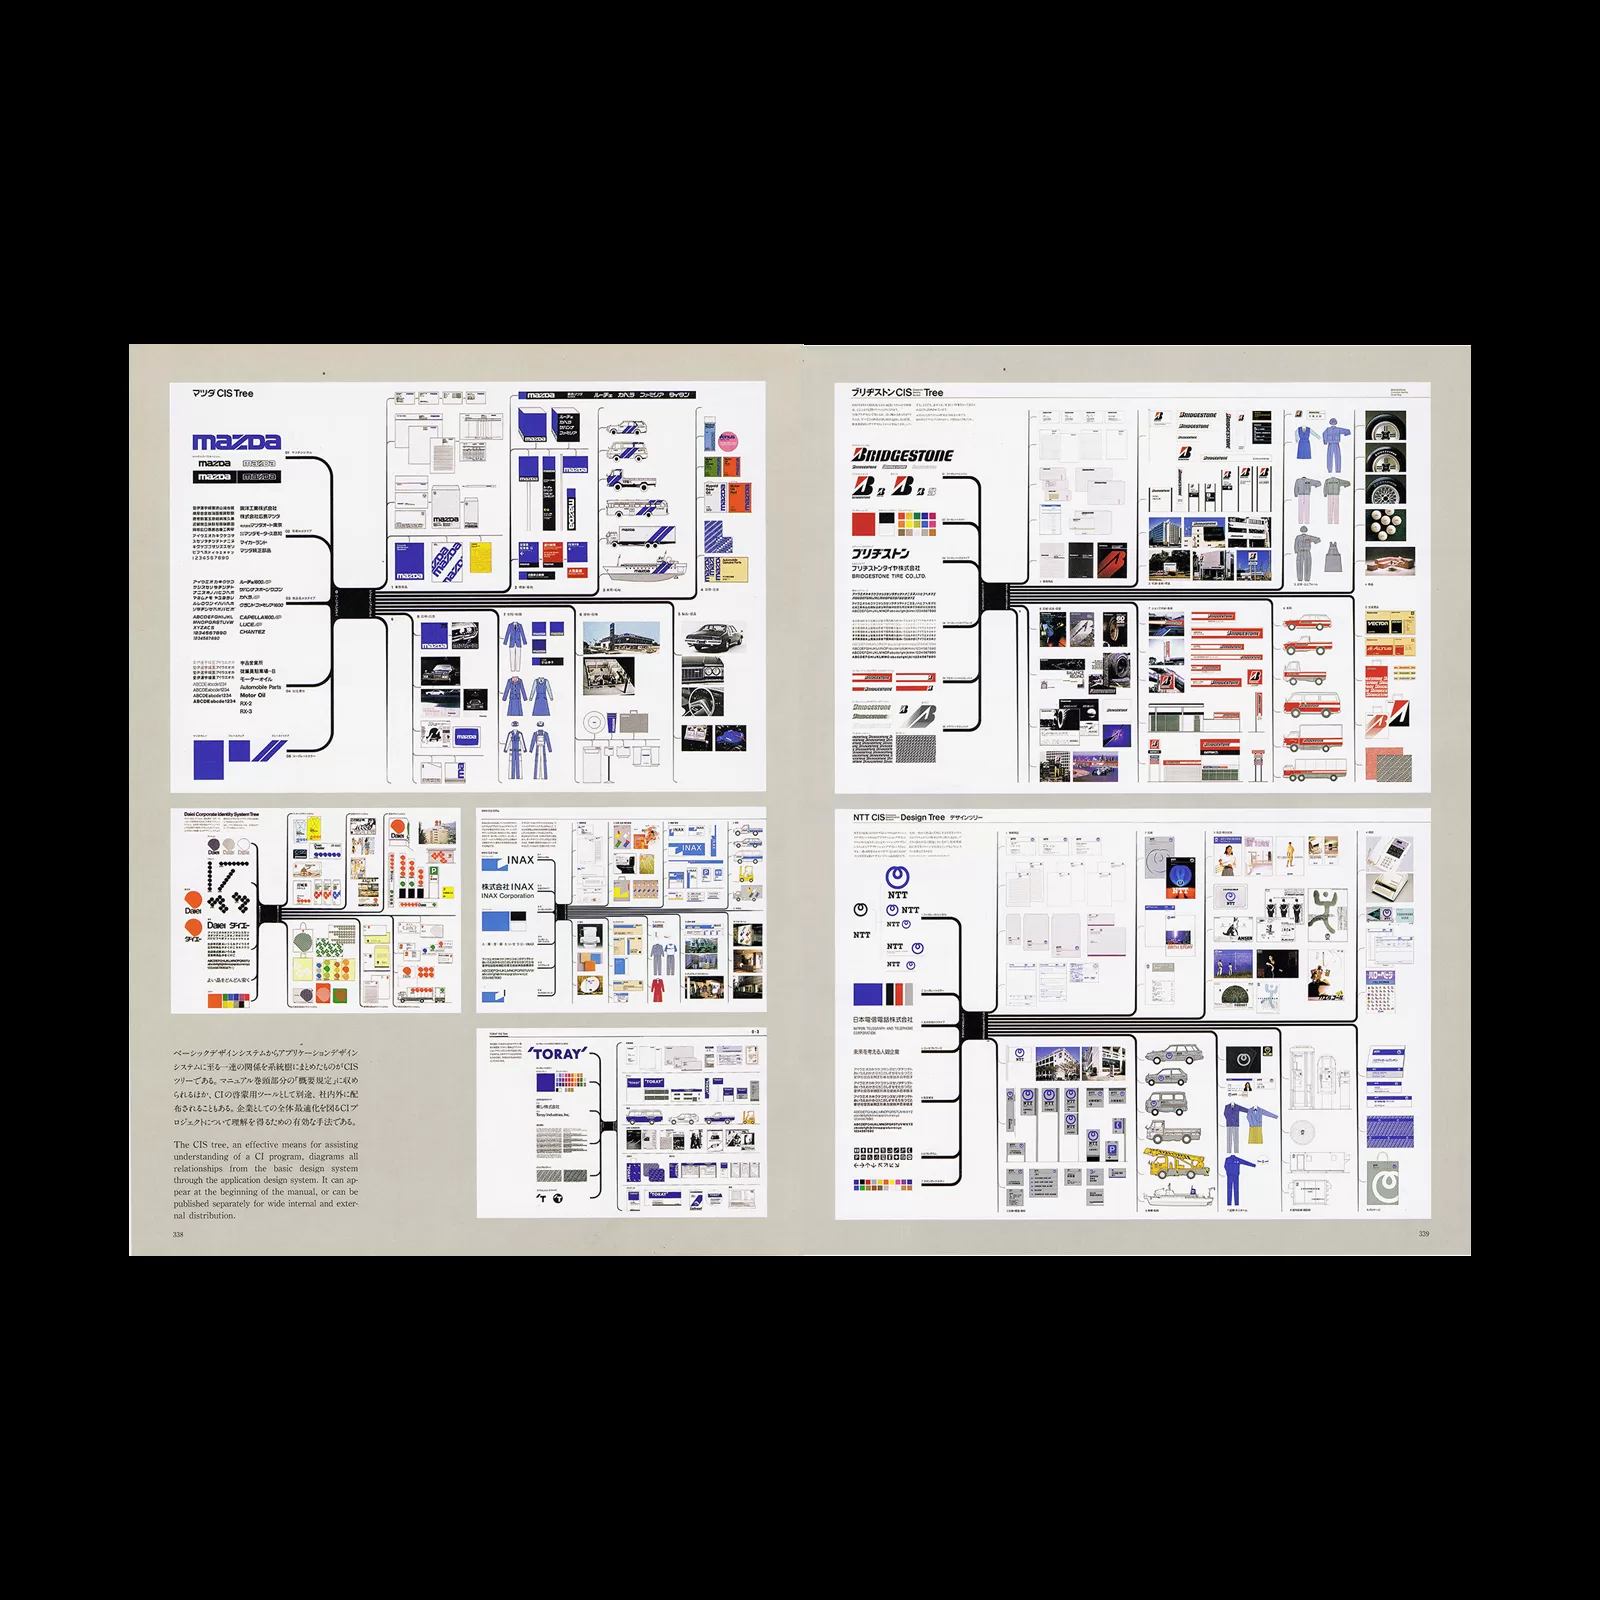 Design system control - PAOS Design, [The World of Corporate Beauty], CI Design, (23 Book Set), 1989